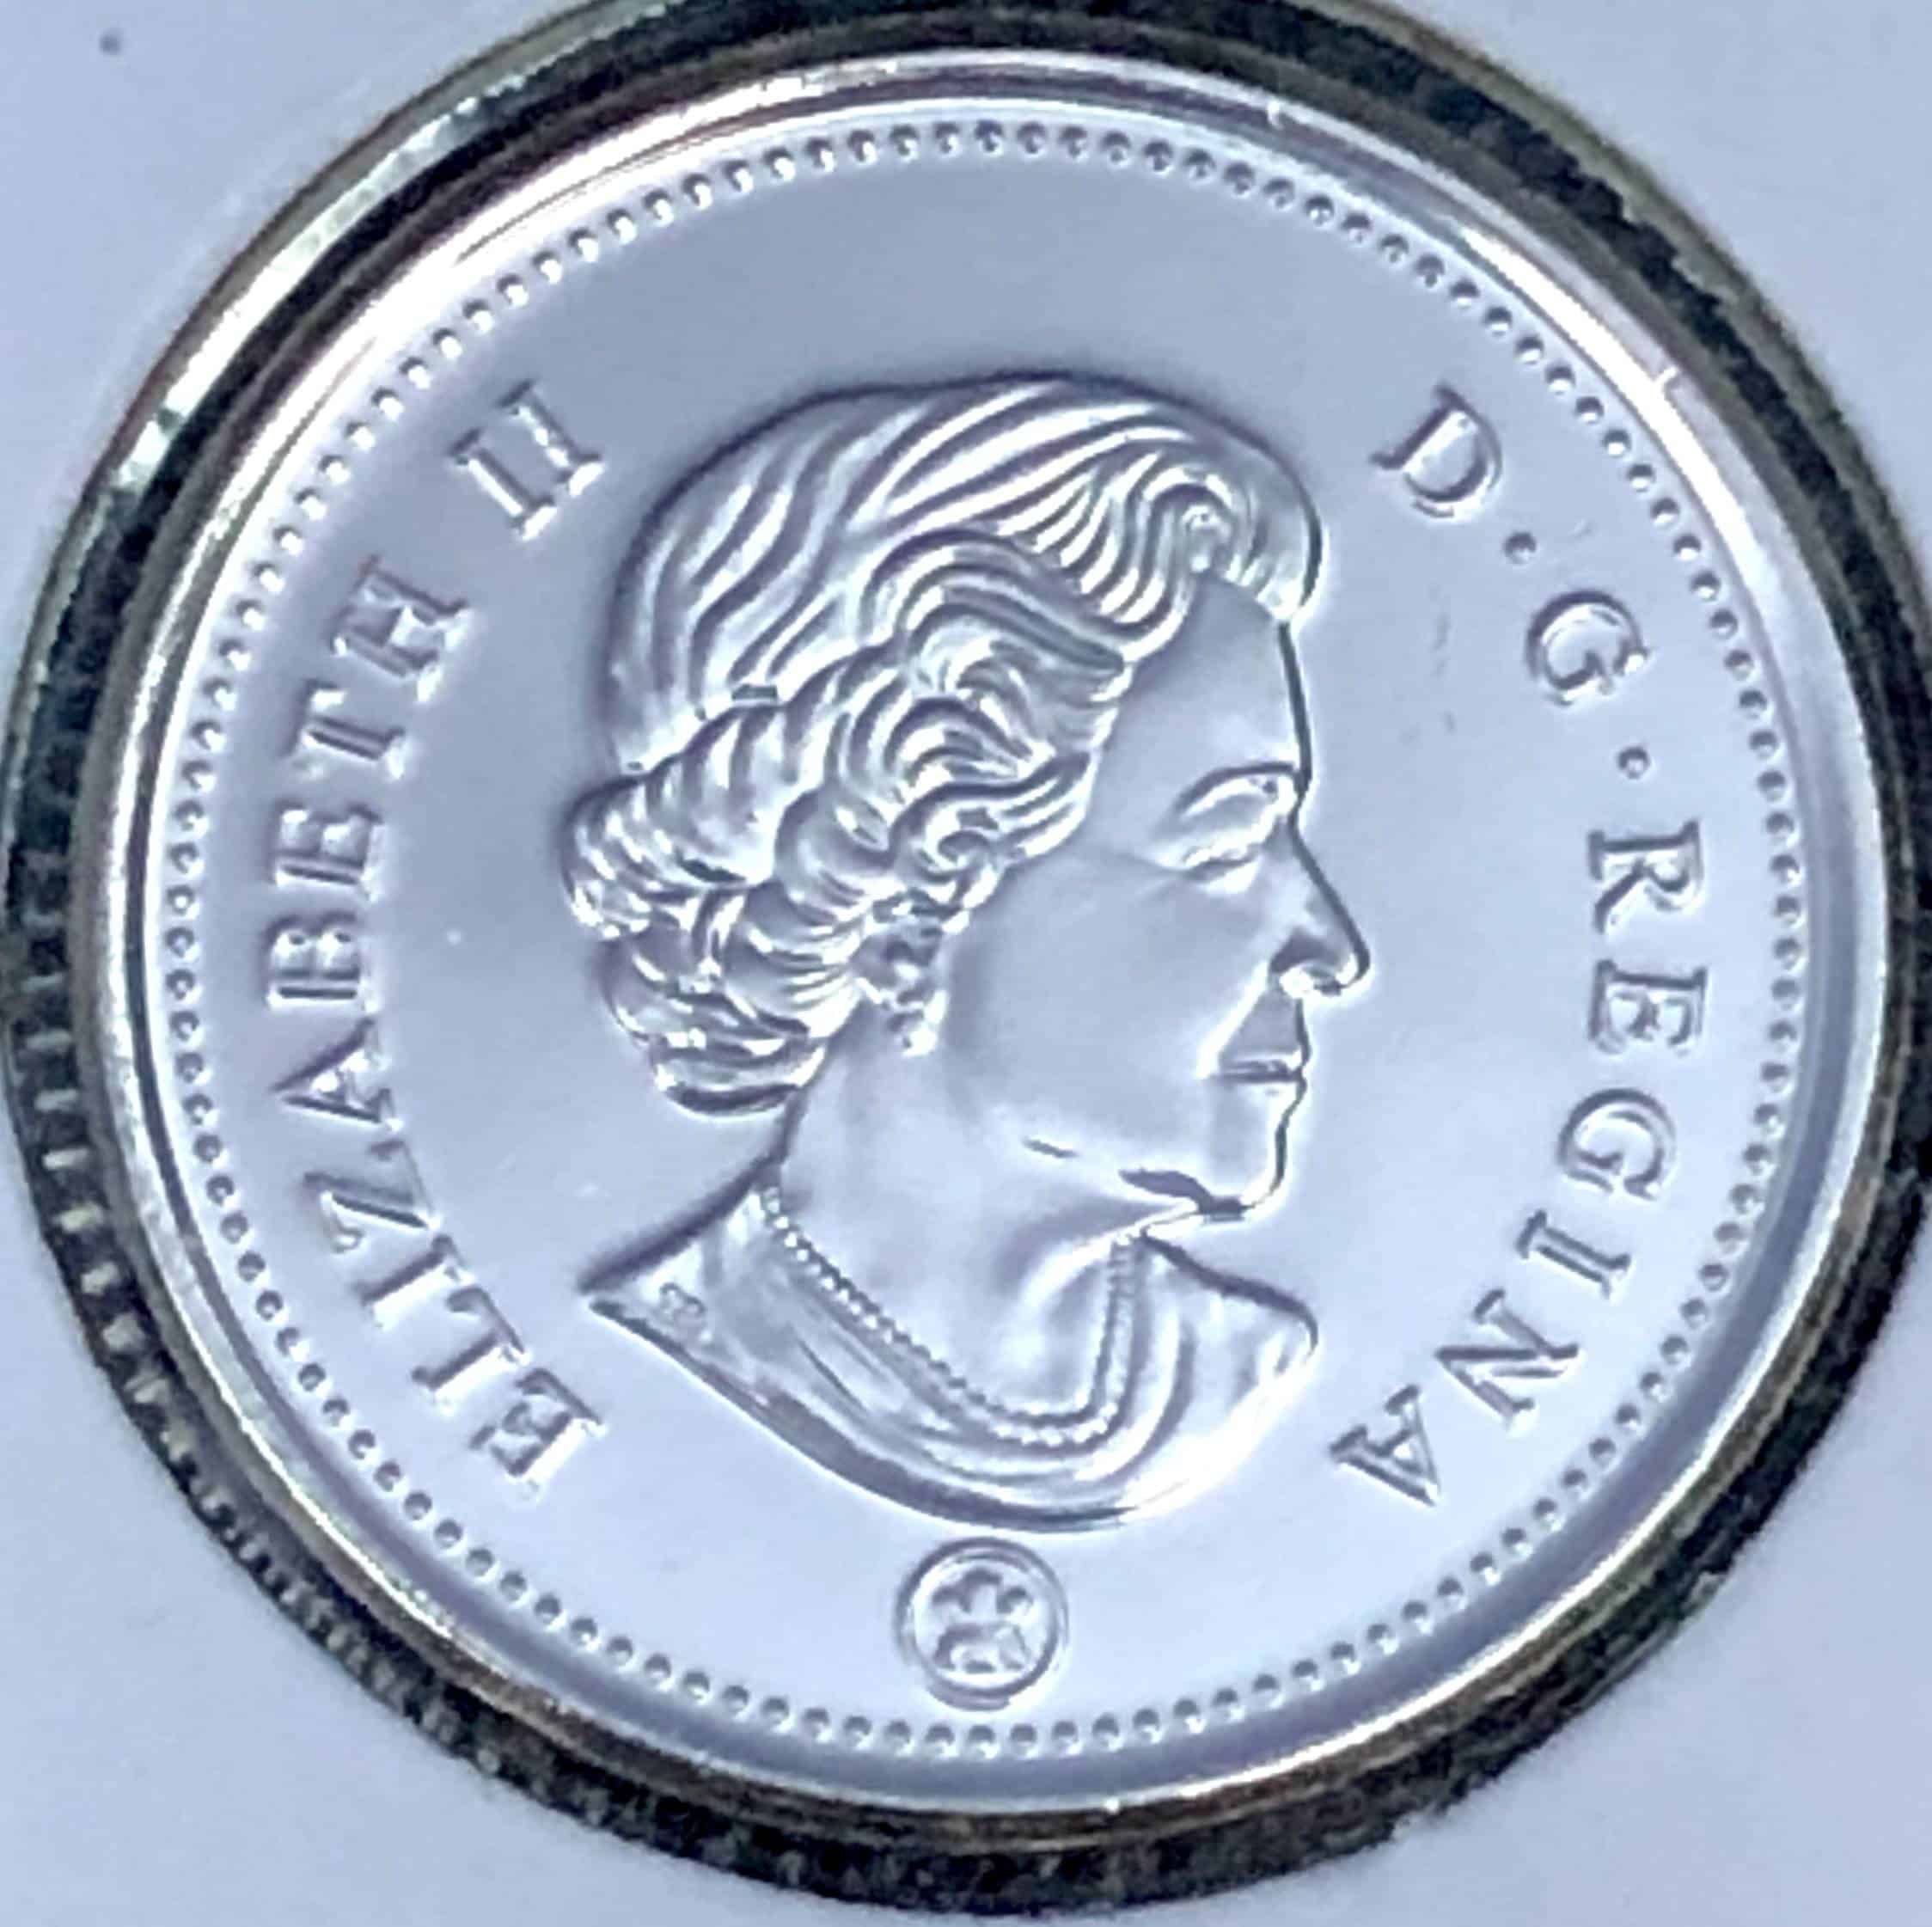 Canada - 10 cents 2014 - B.UNC